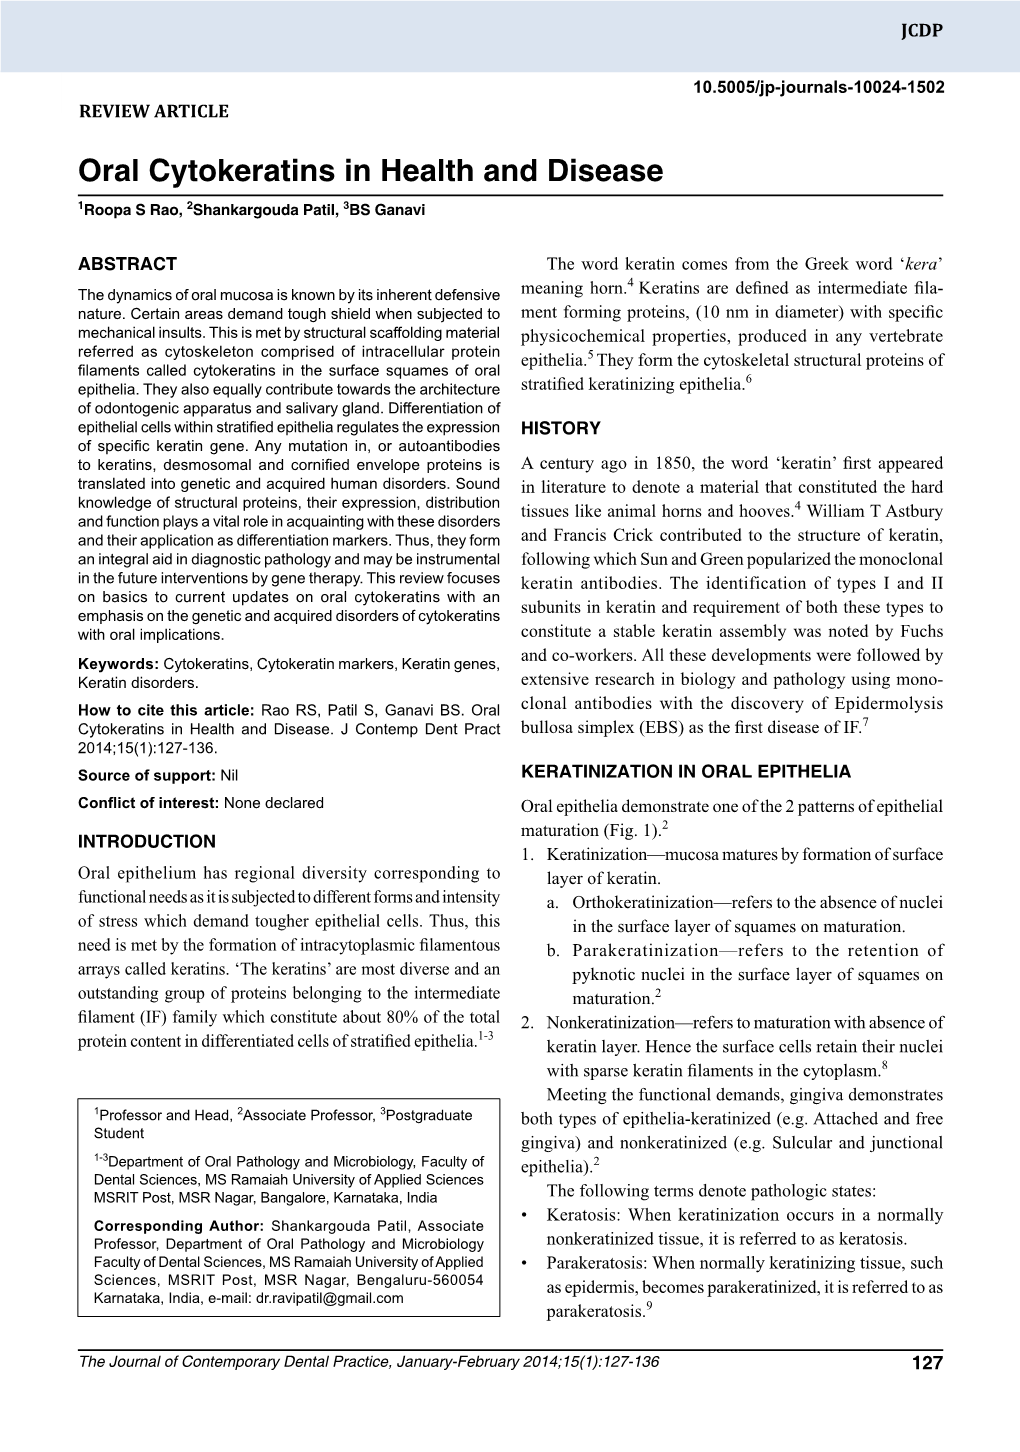 Oral Cytokeratins in Health and Disease 1Roopa S Rao, 2Shankargouda Patil, 3BS Ganavi